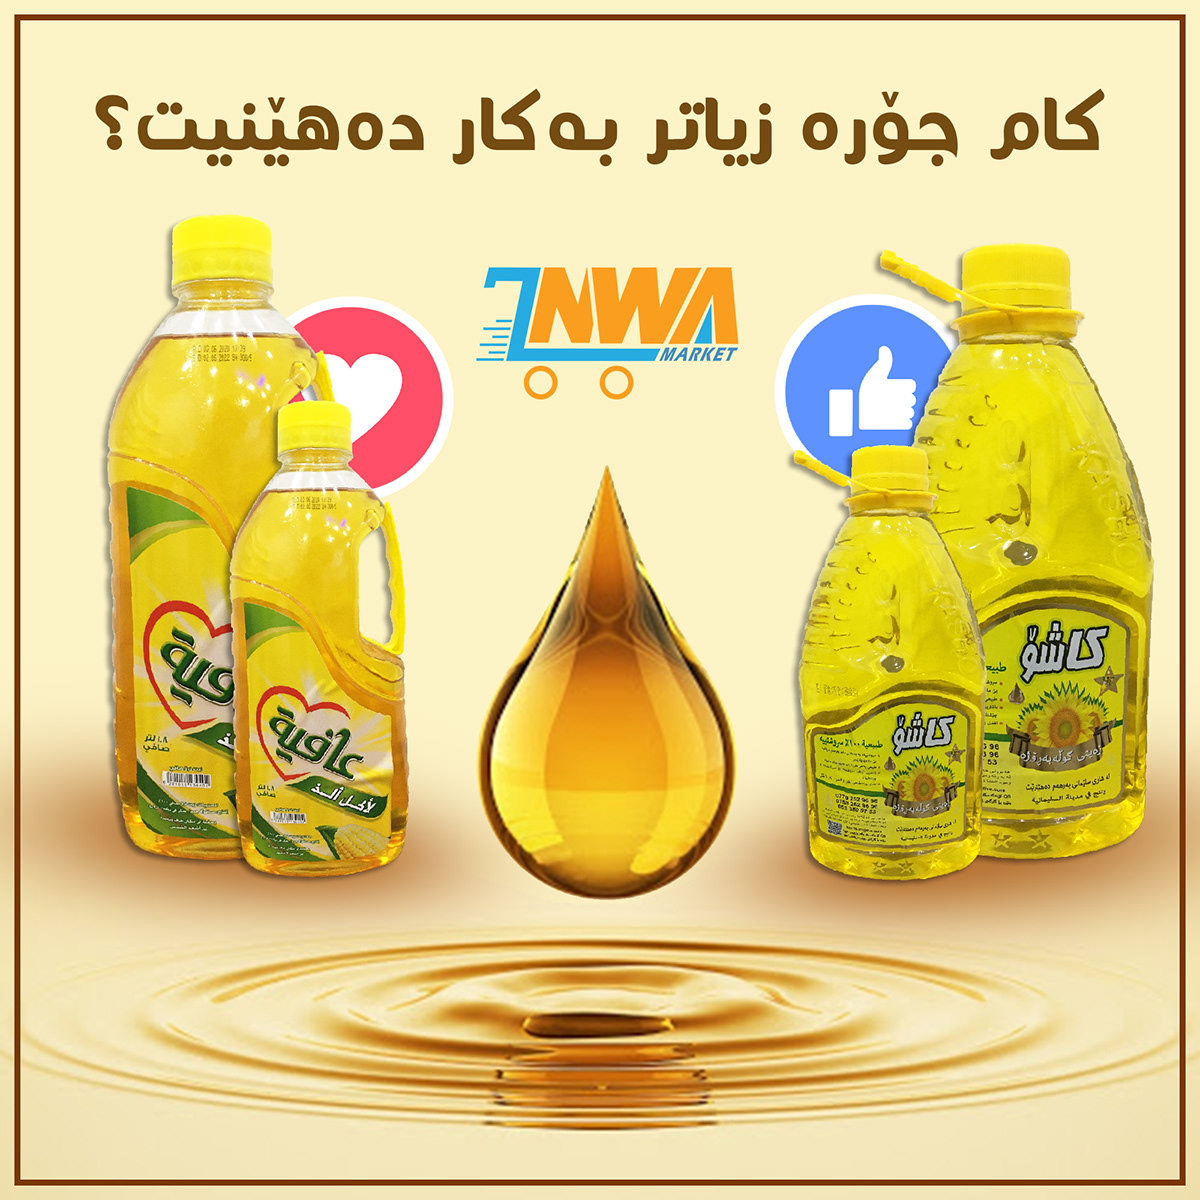 design Food  market Nwa market social media Advertising  designer graphic design  marketing   Social Media Design